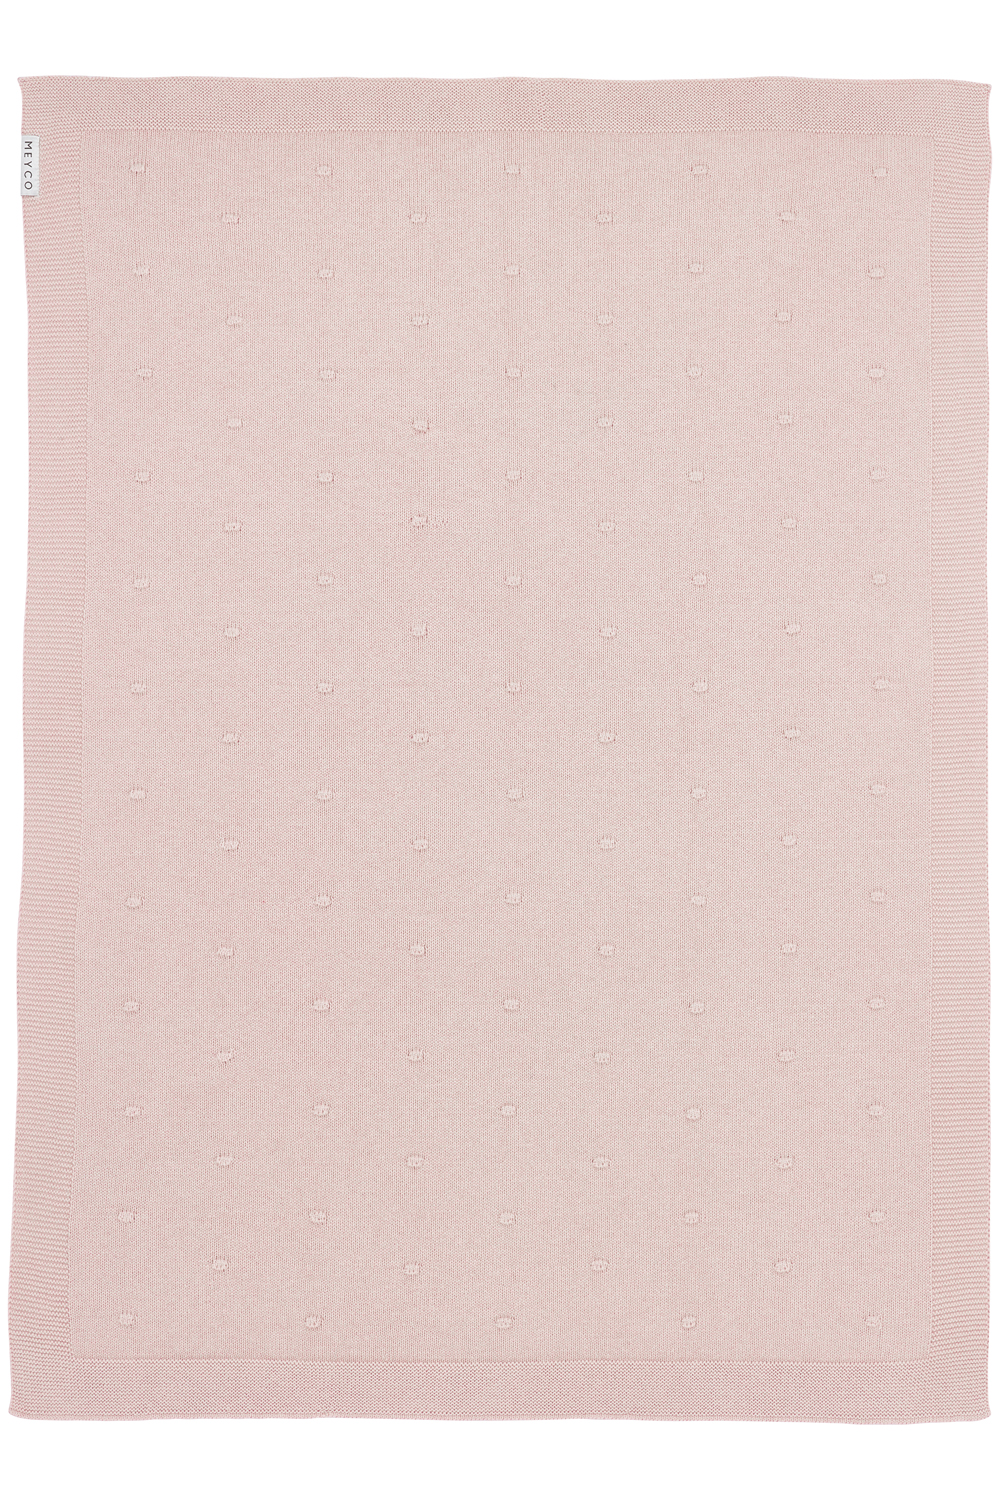 Babydecke groß Mini Knots - soft pink - 100x150cm